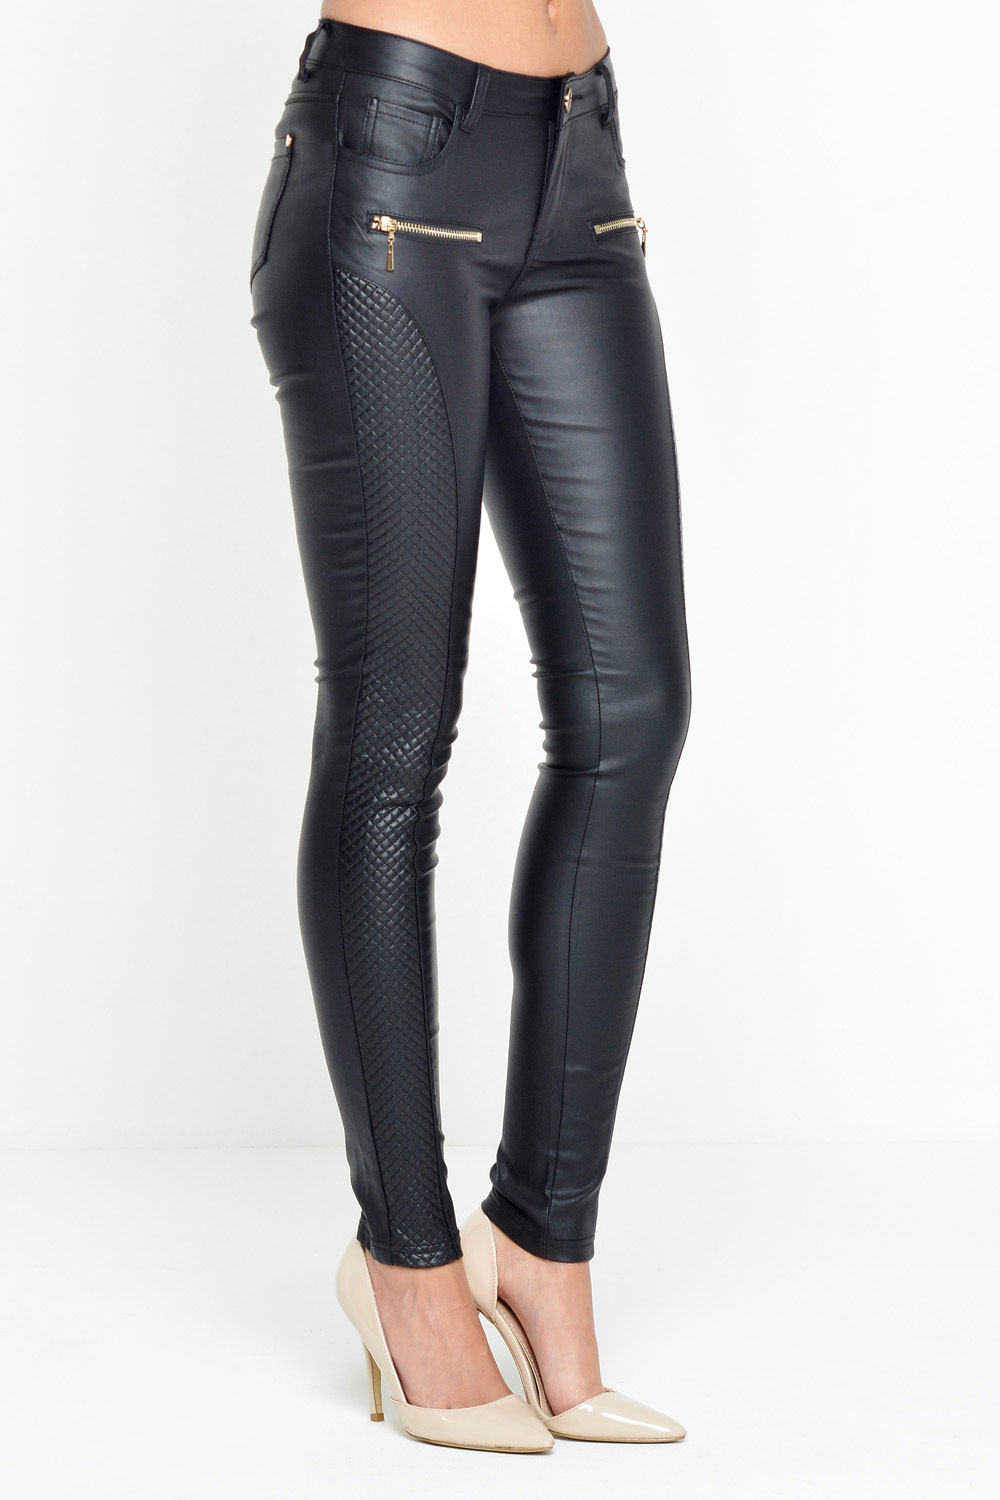 KISS Kristy Wax Biker Trousers in Black | iCLOTHING - iCLOTHING